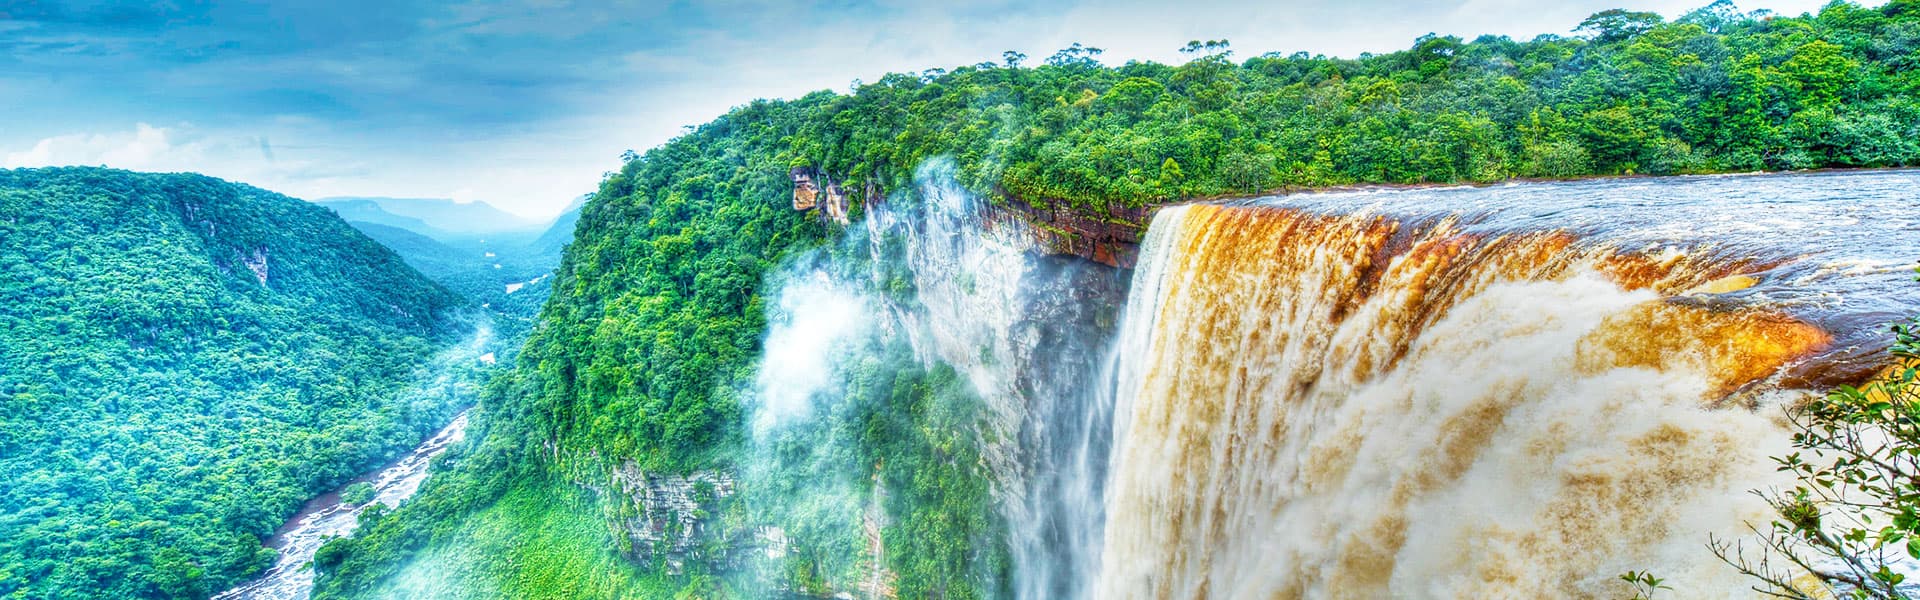 The Kaieteur Falls, Guyana